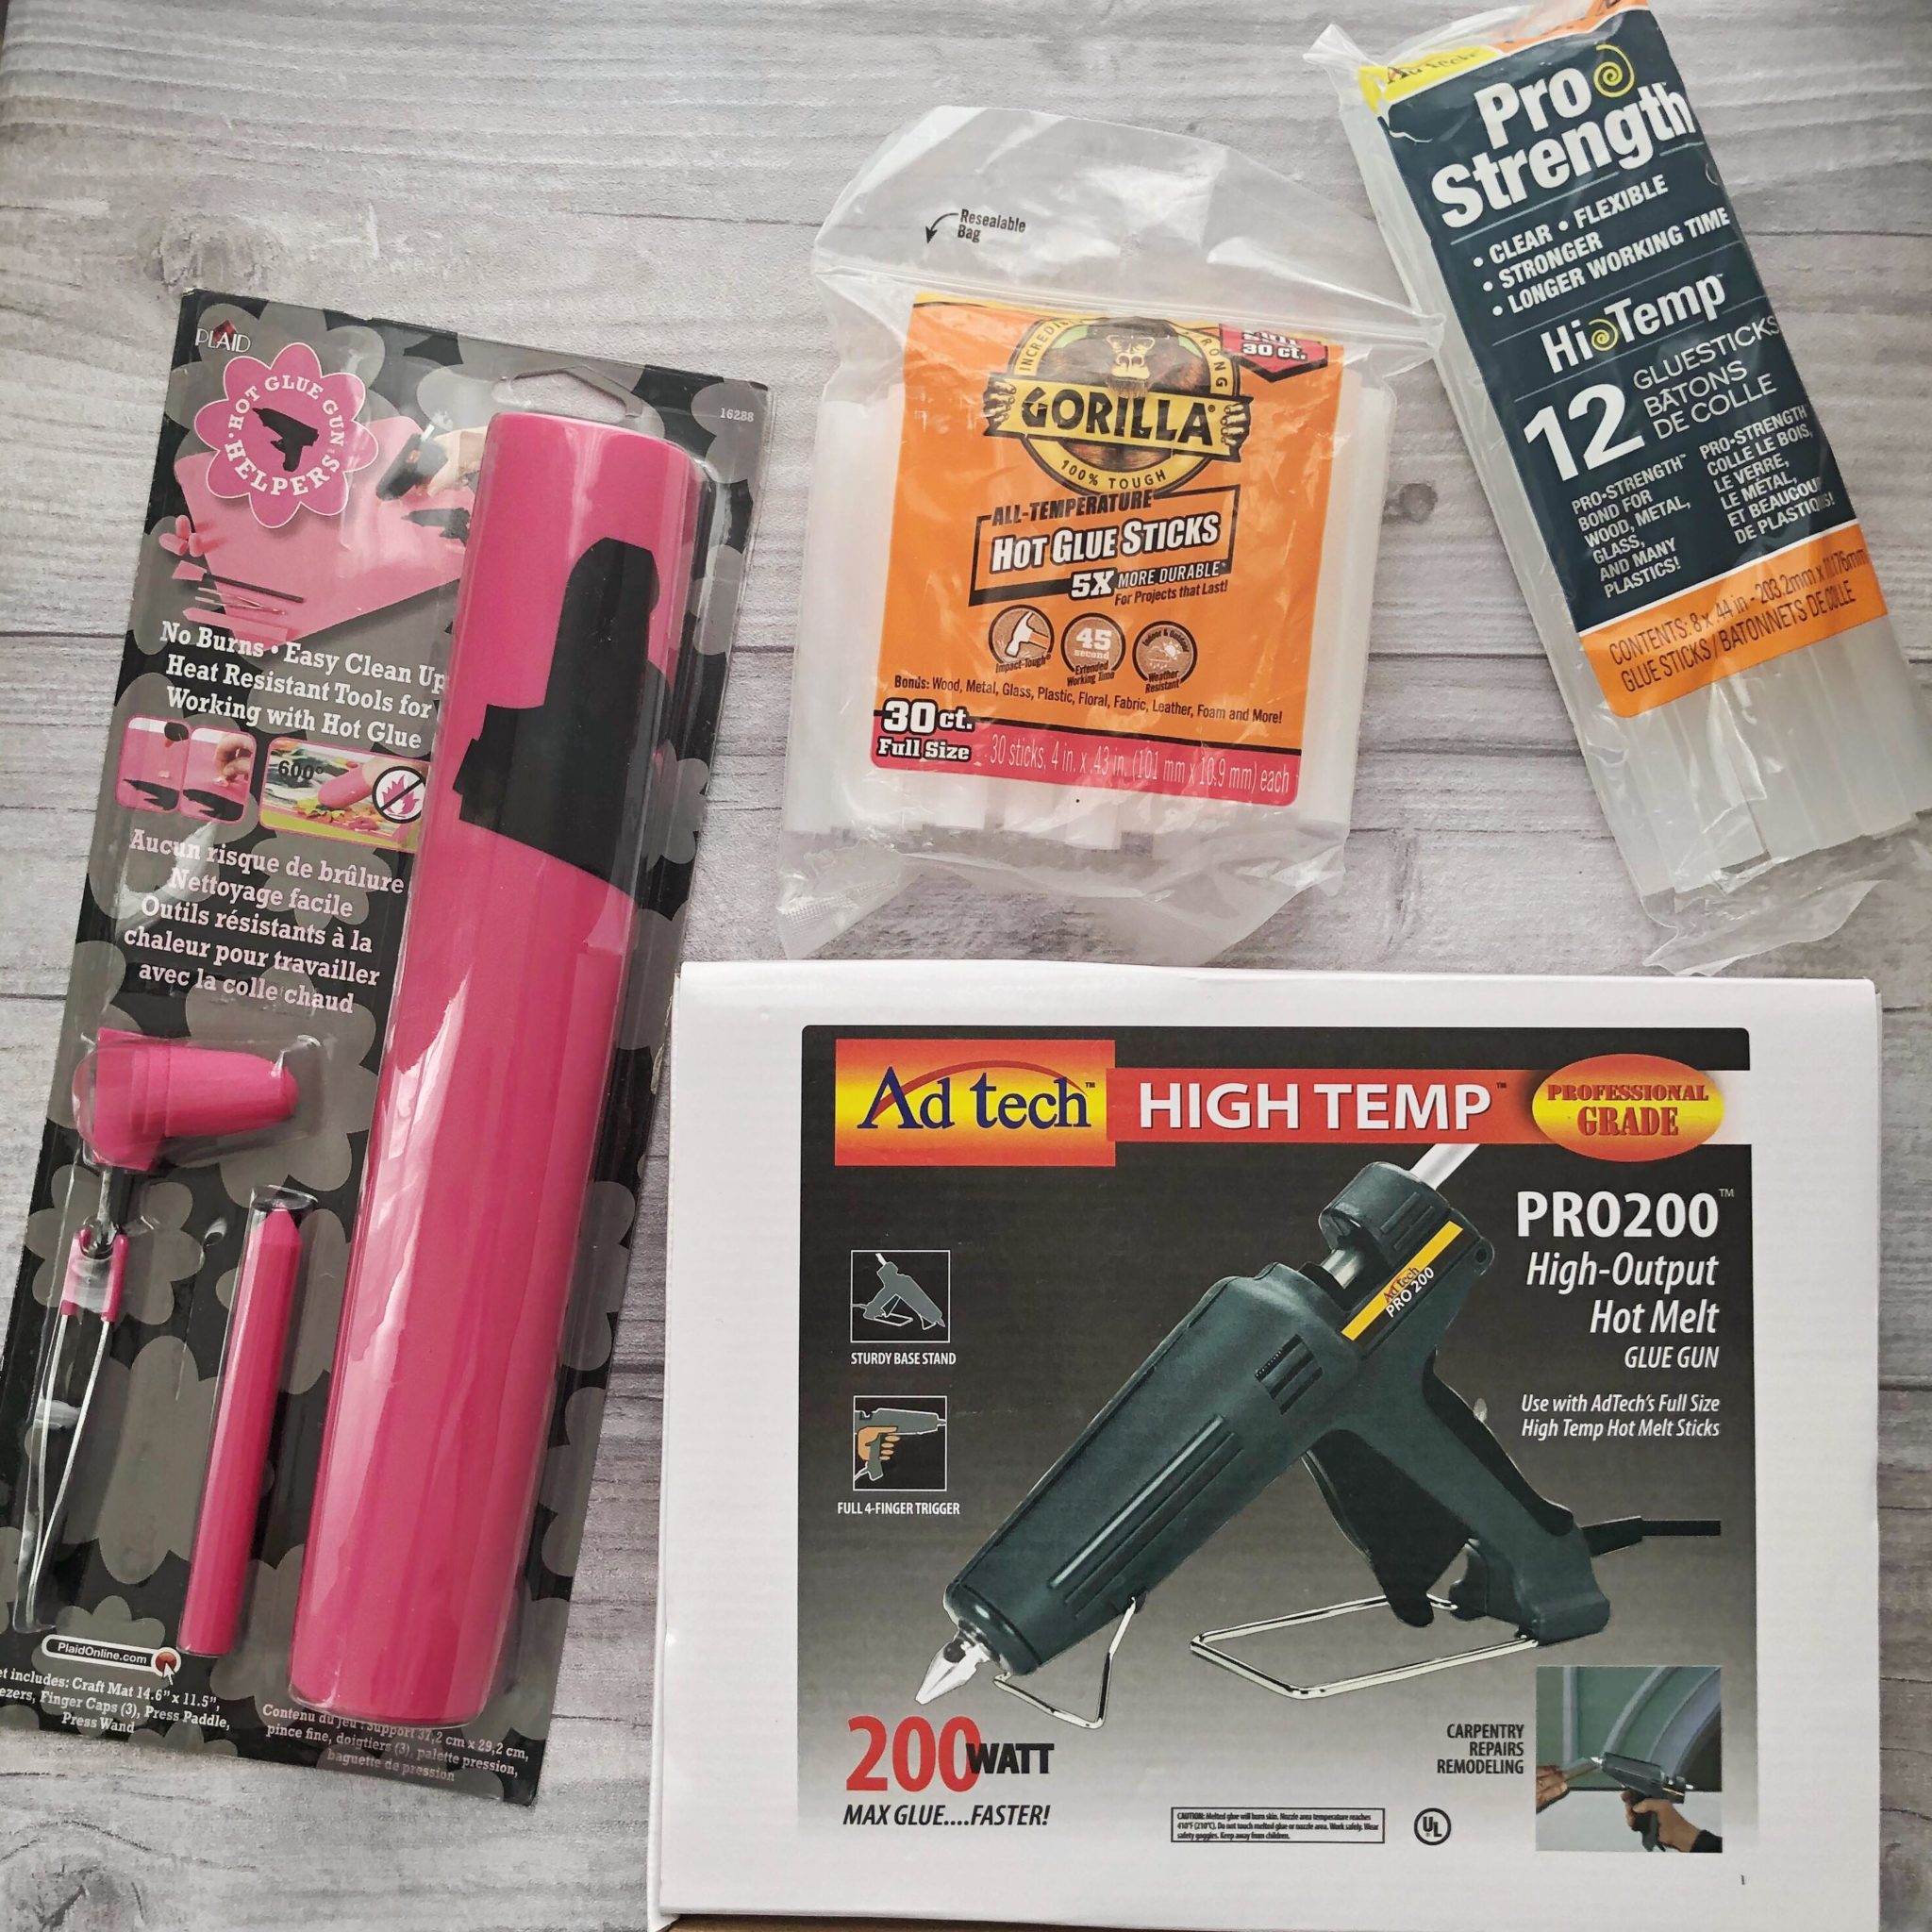 Glue gun prize pack giveaway